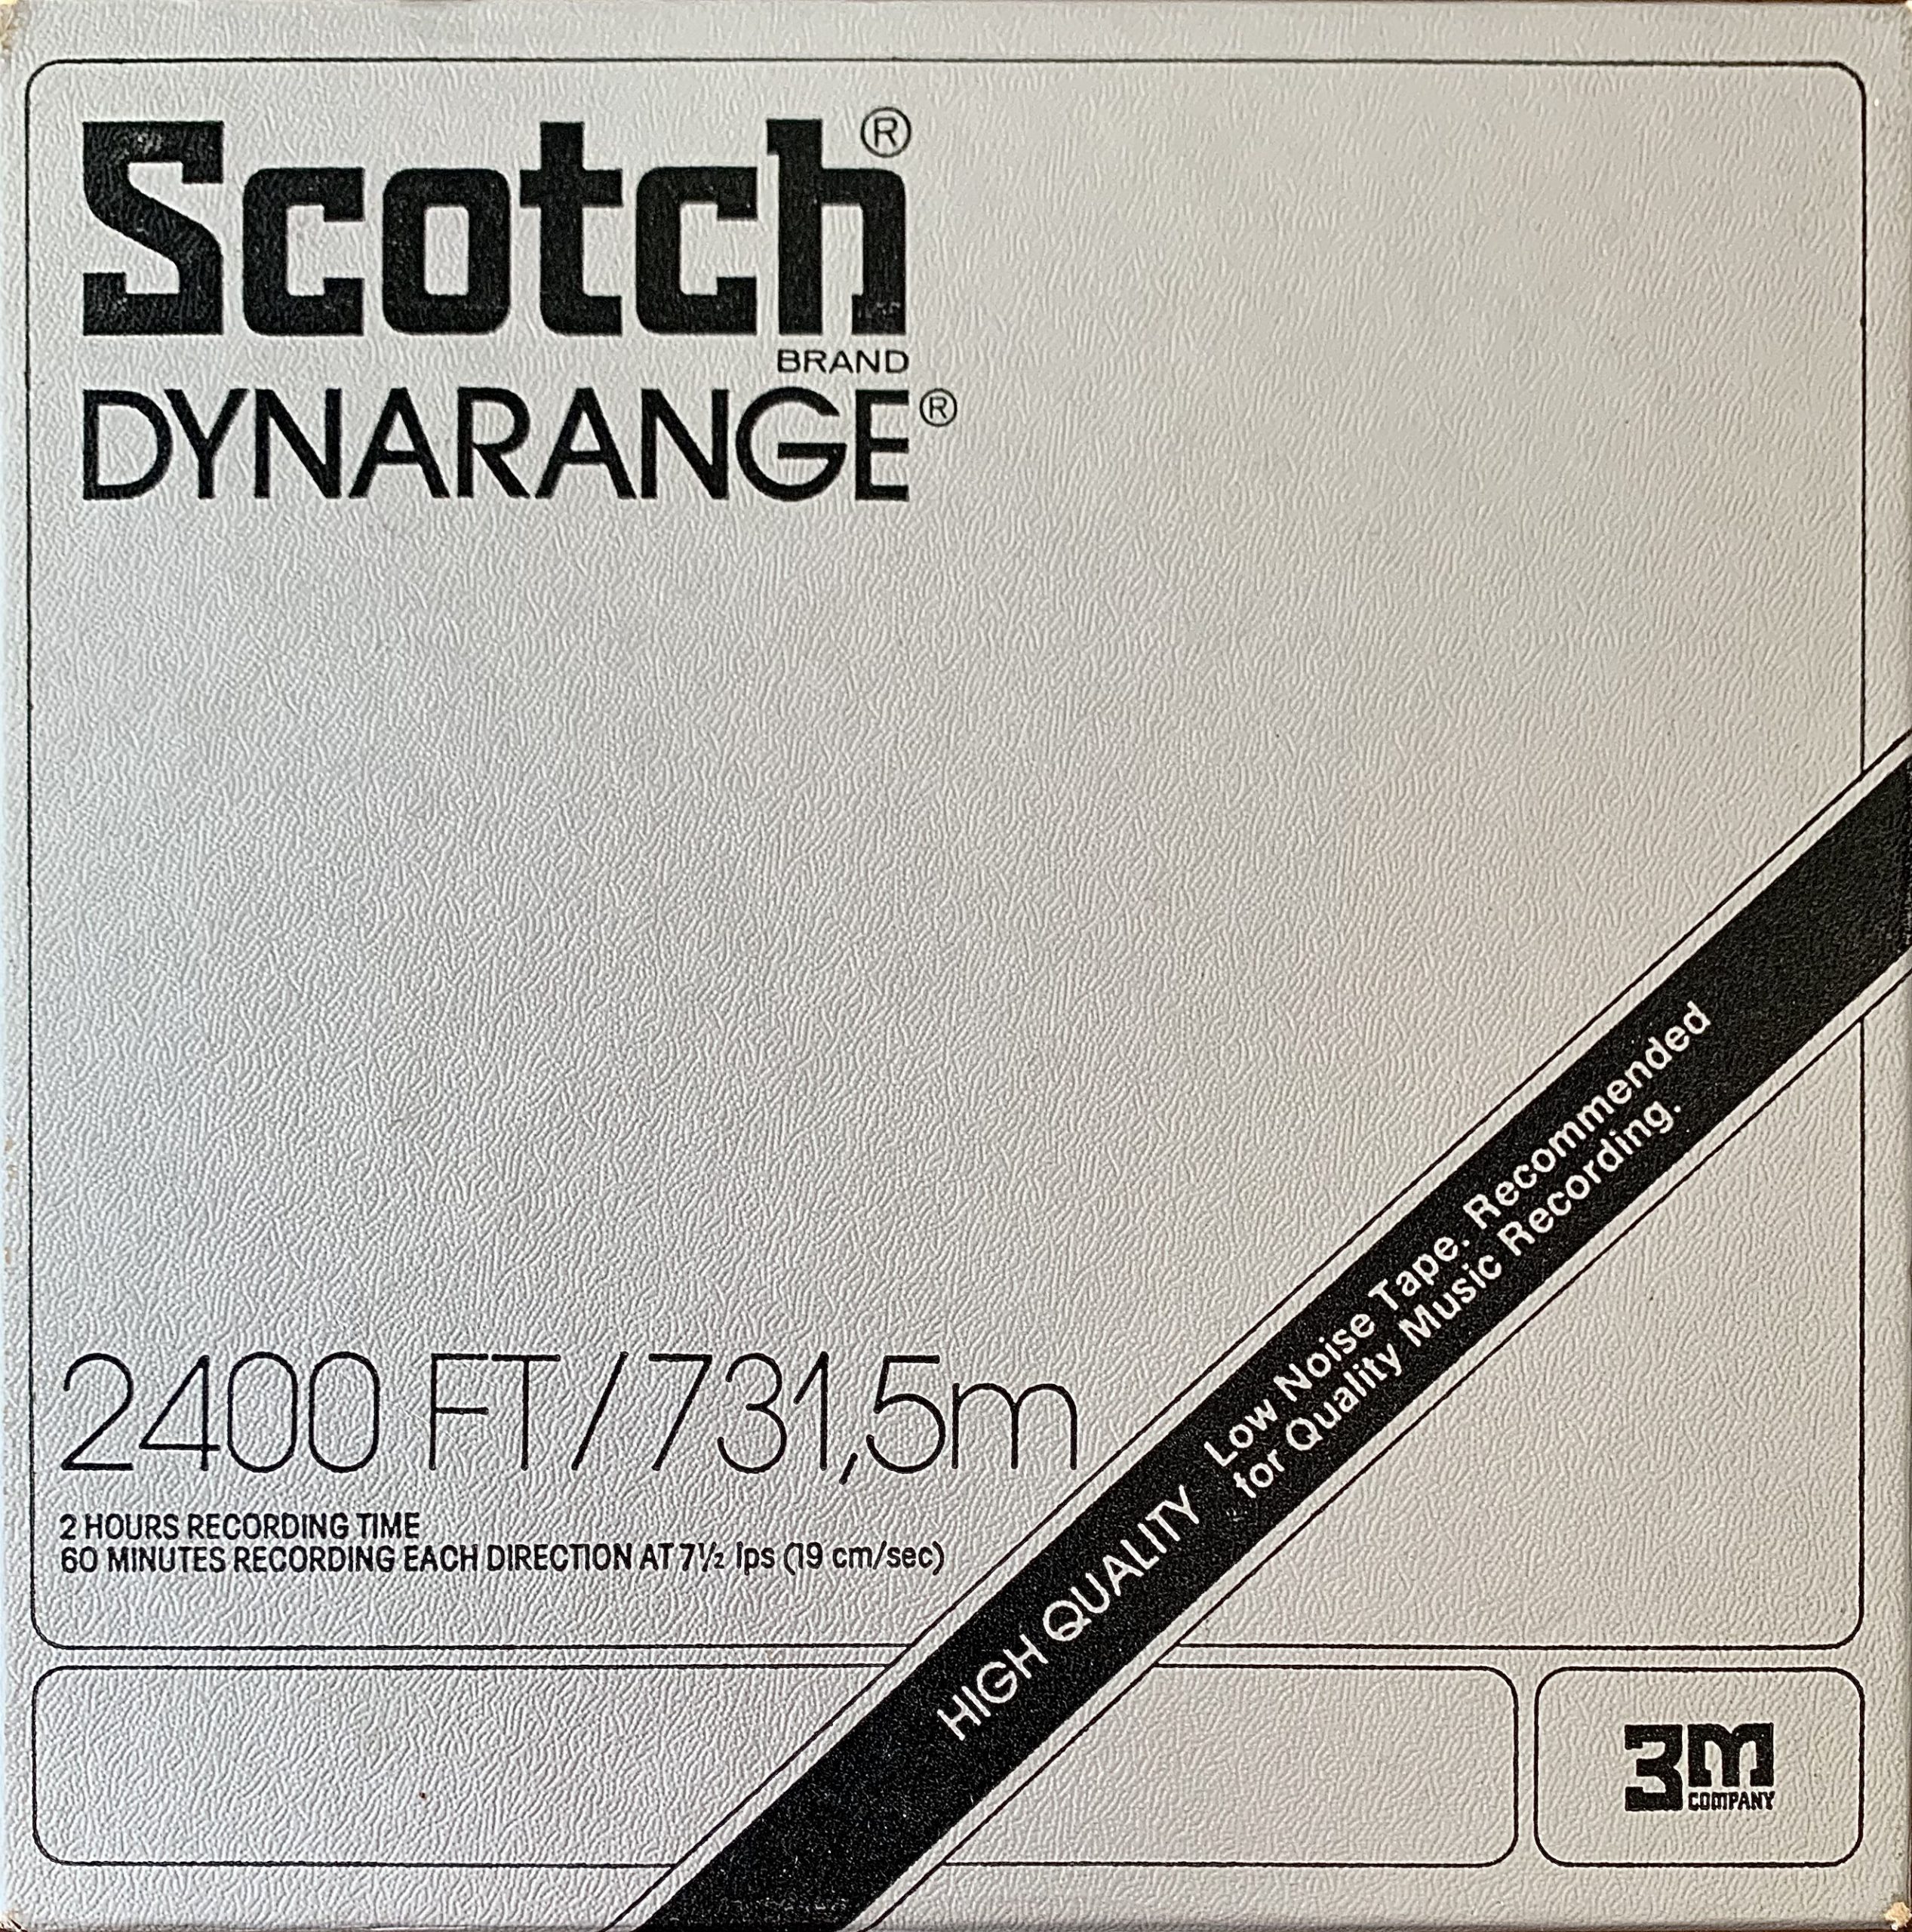 Scotch 290 Reel to Reel Recording Tape, TP, 7″ Reel, 3600 ft - Reel to Reel  Warehouse